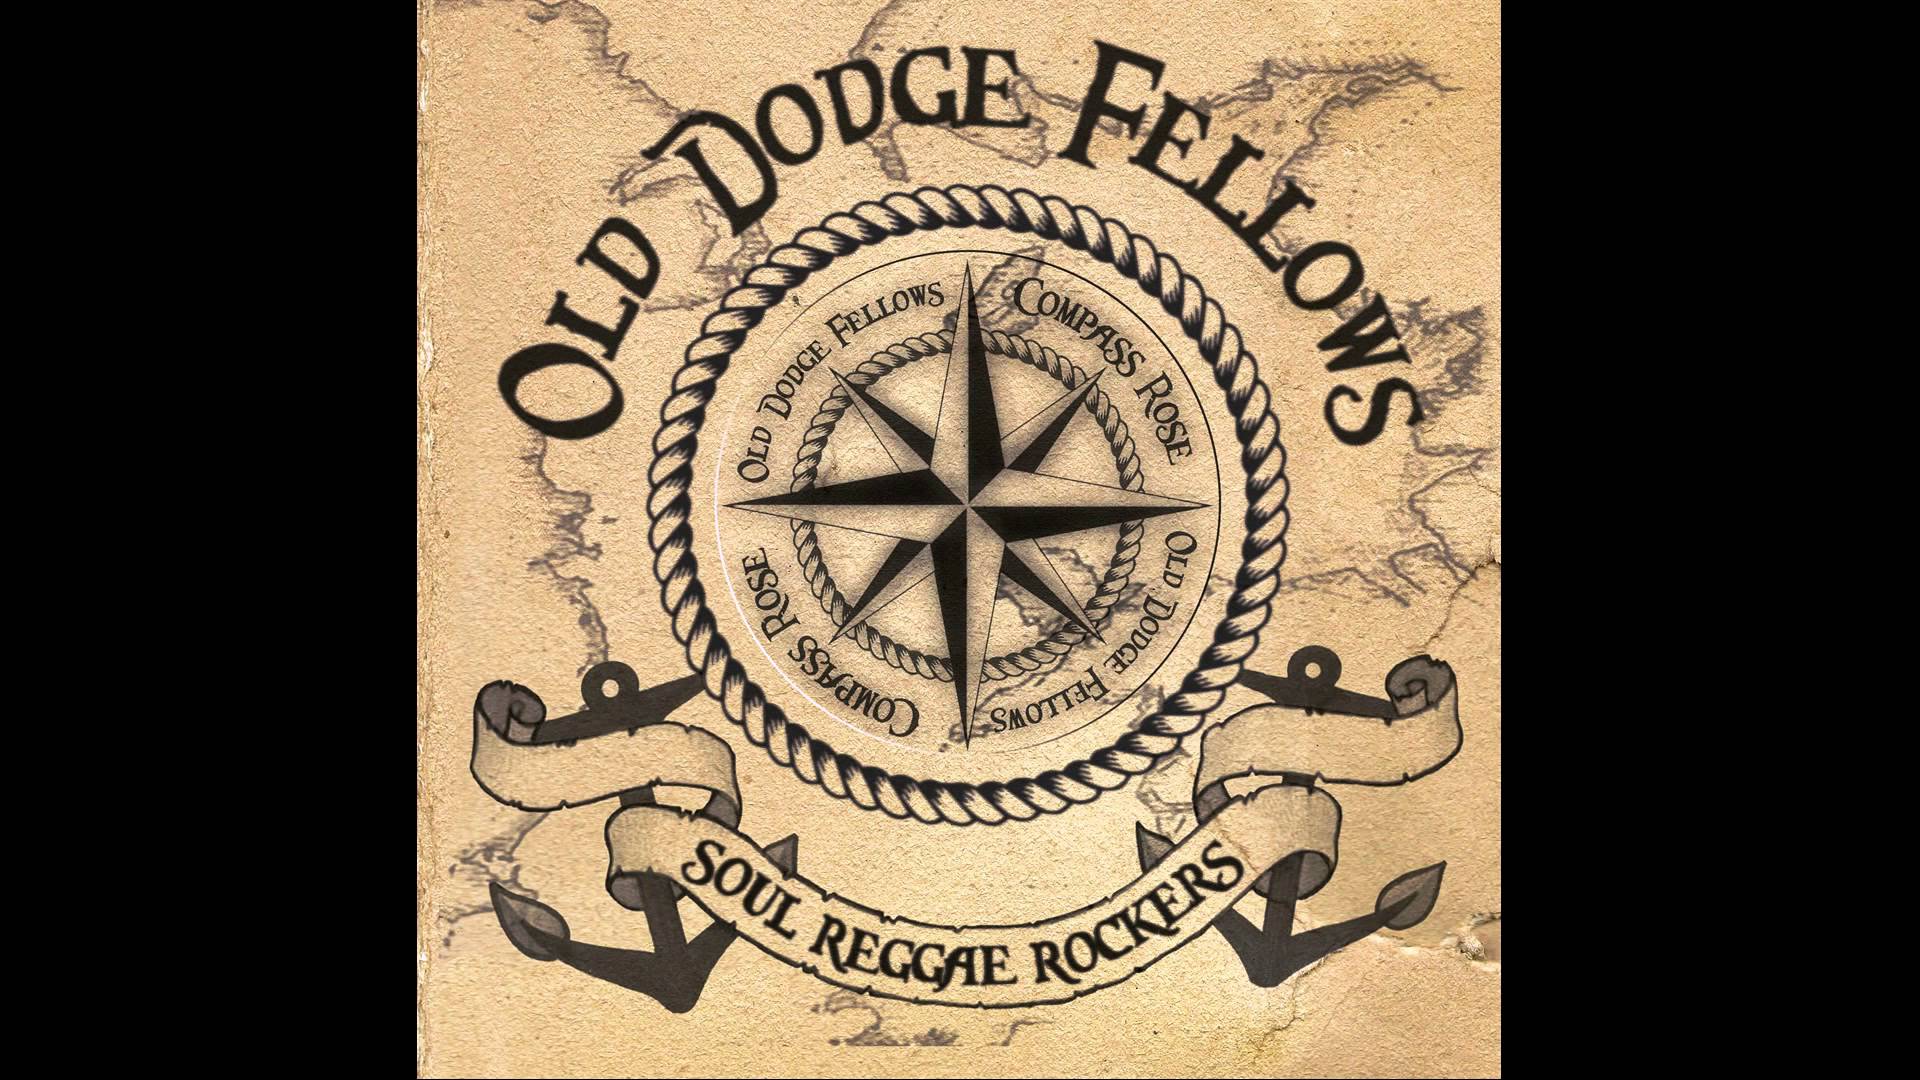 OLD DODGE FELLOWS "Soul reggae rockers" - 7''